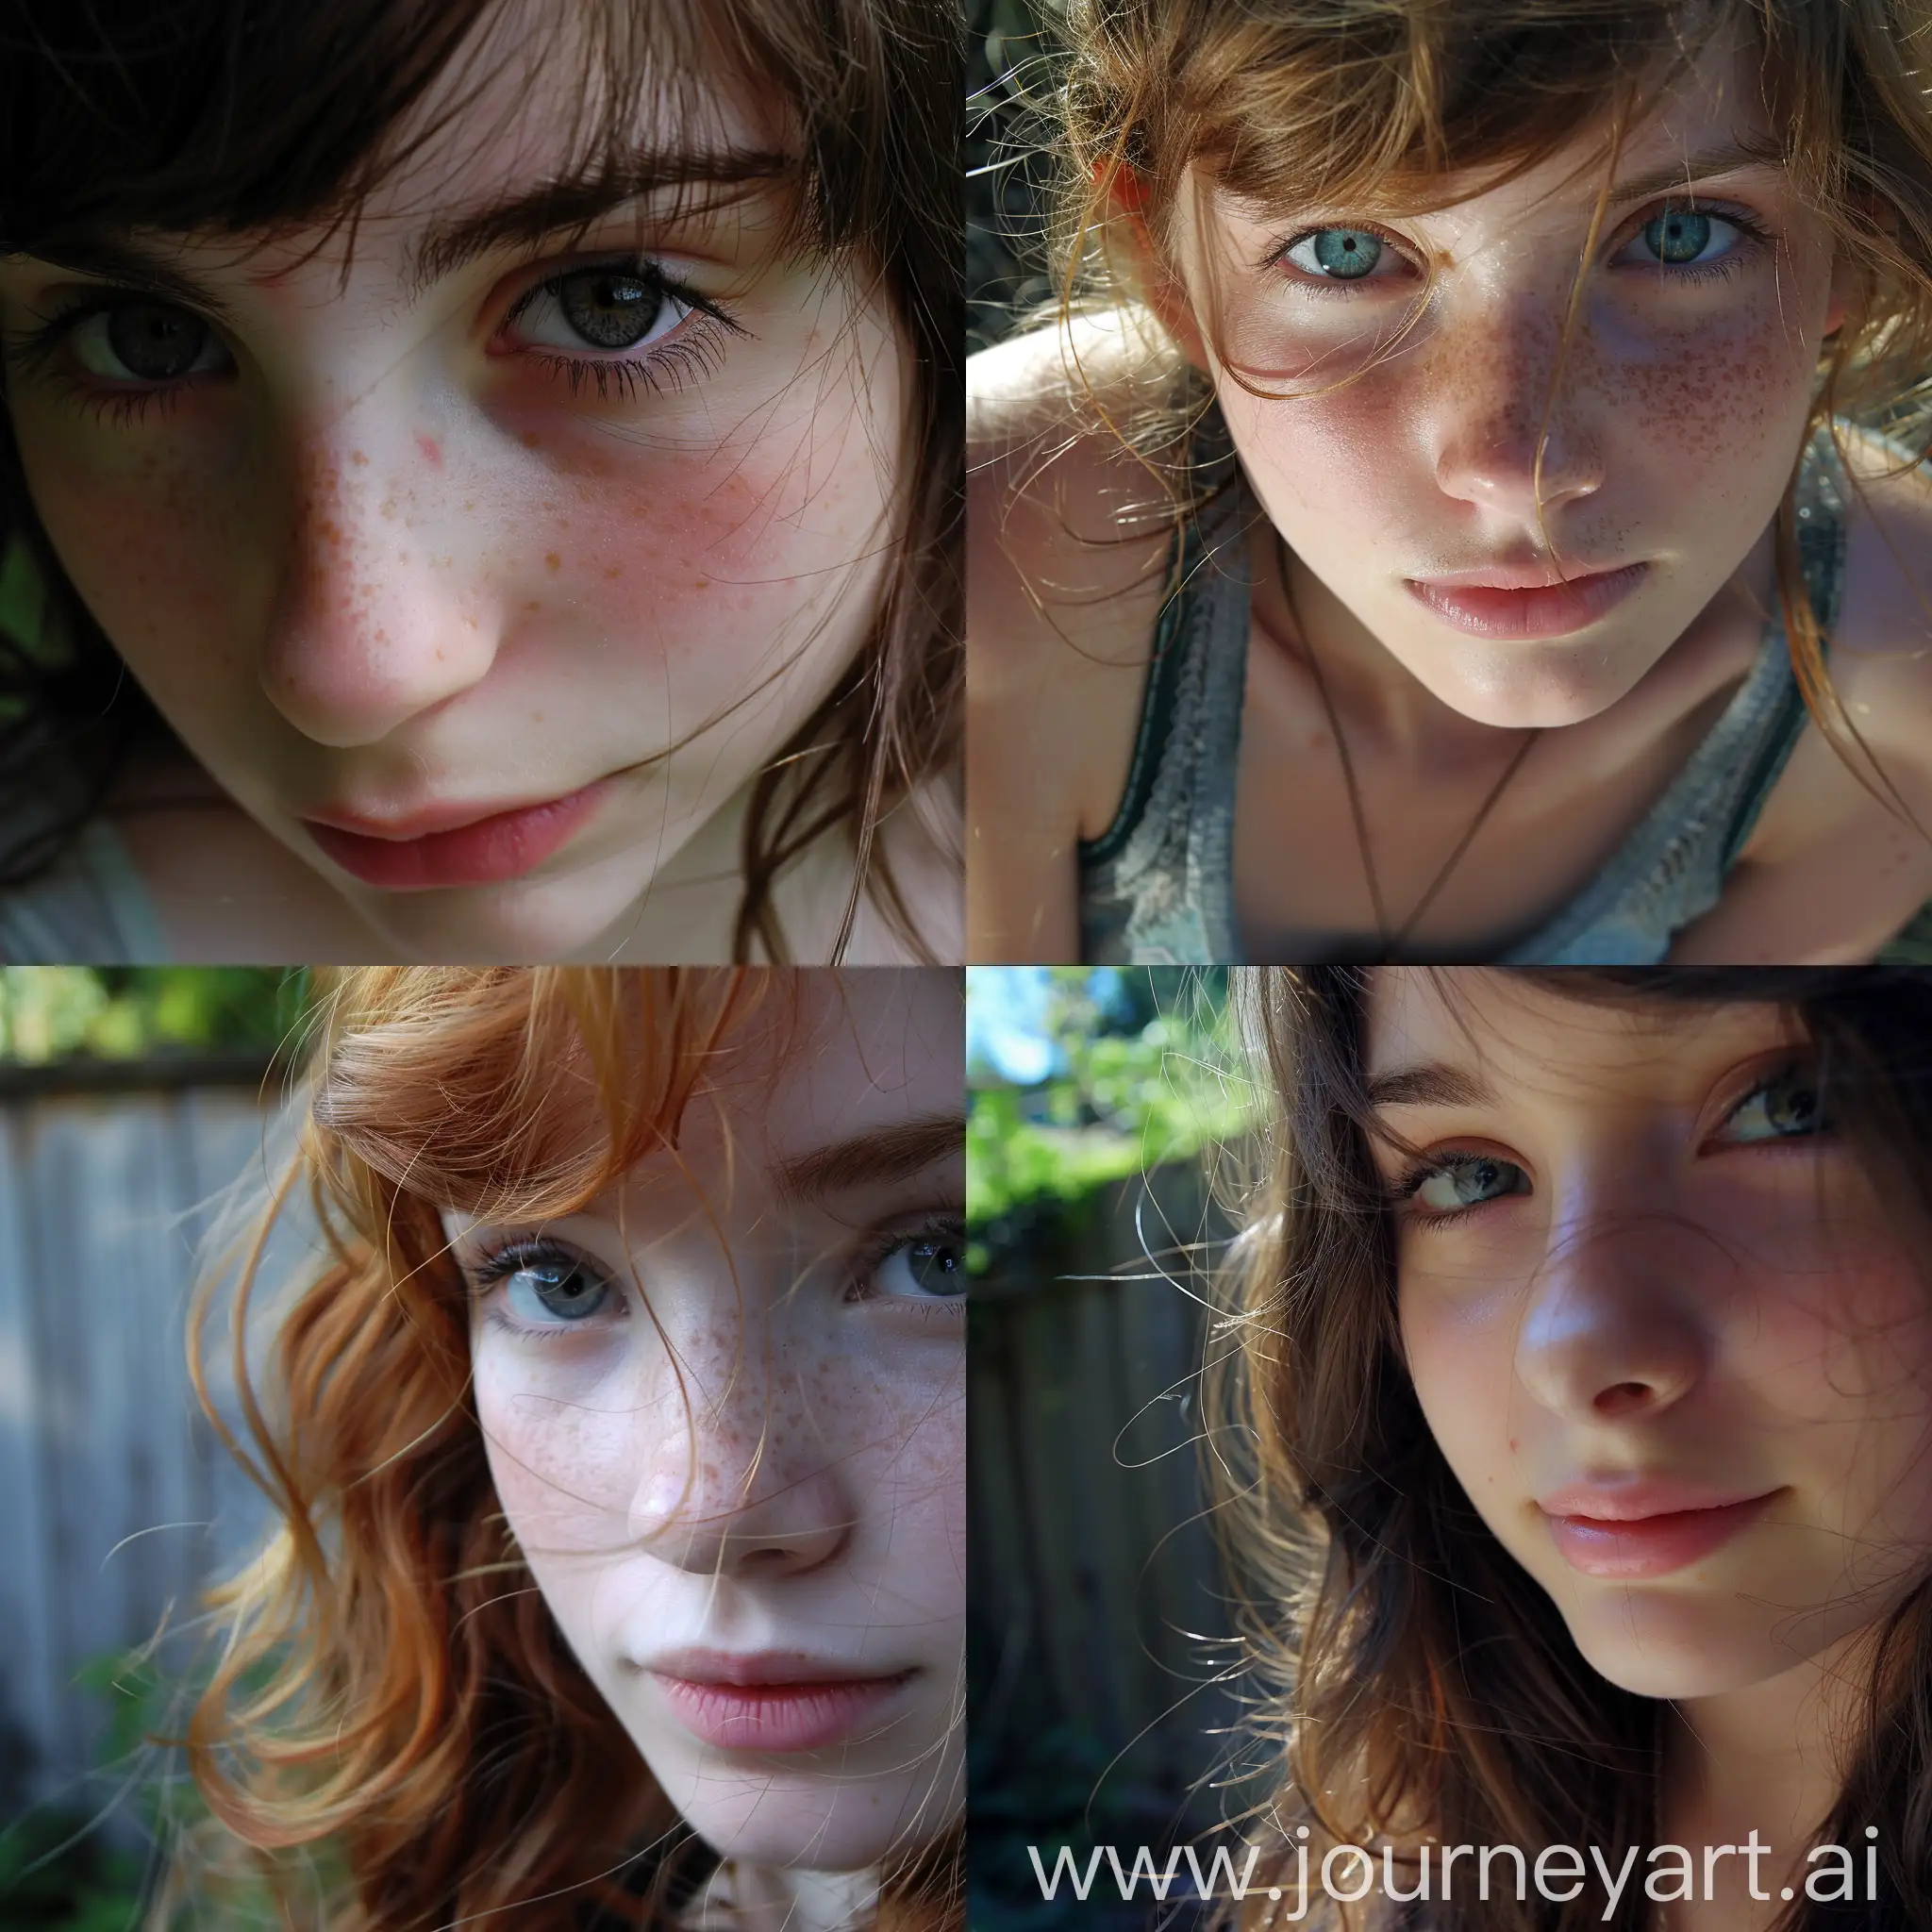 Pixelated-Closeup-Portrait-of-an-18YearOld-Girl-in-a-Backyard-Setting-Panasonic-Lumix-DMCFZ28